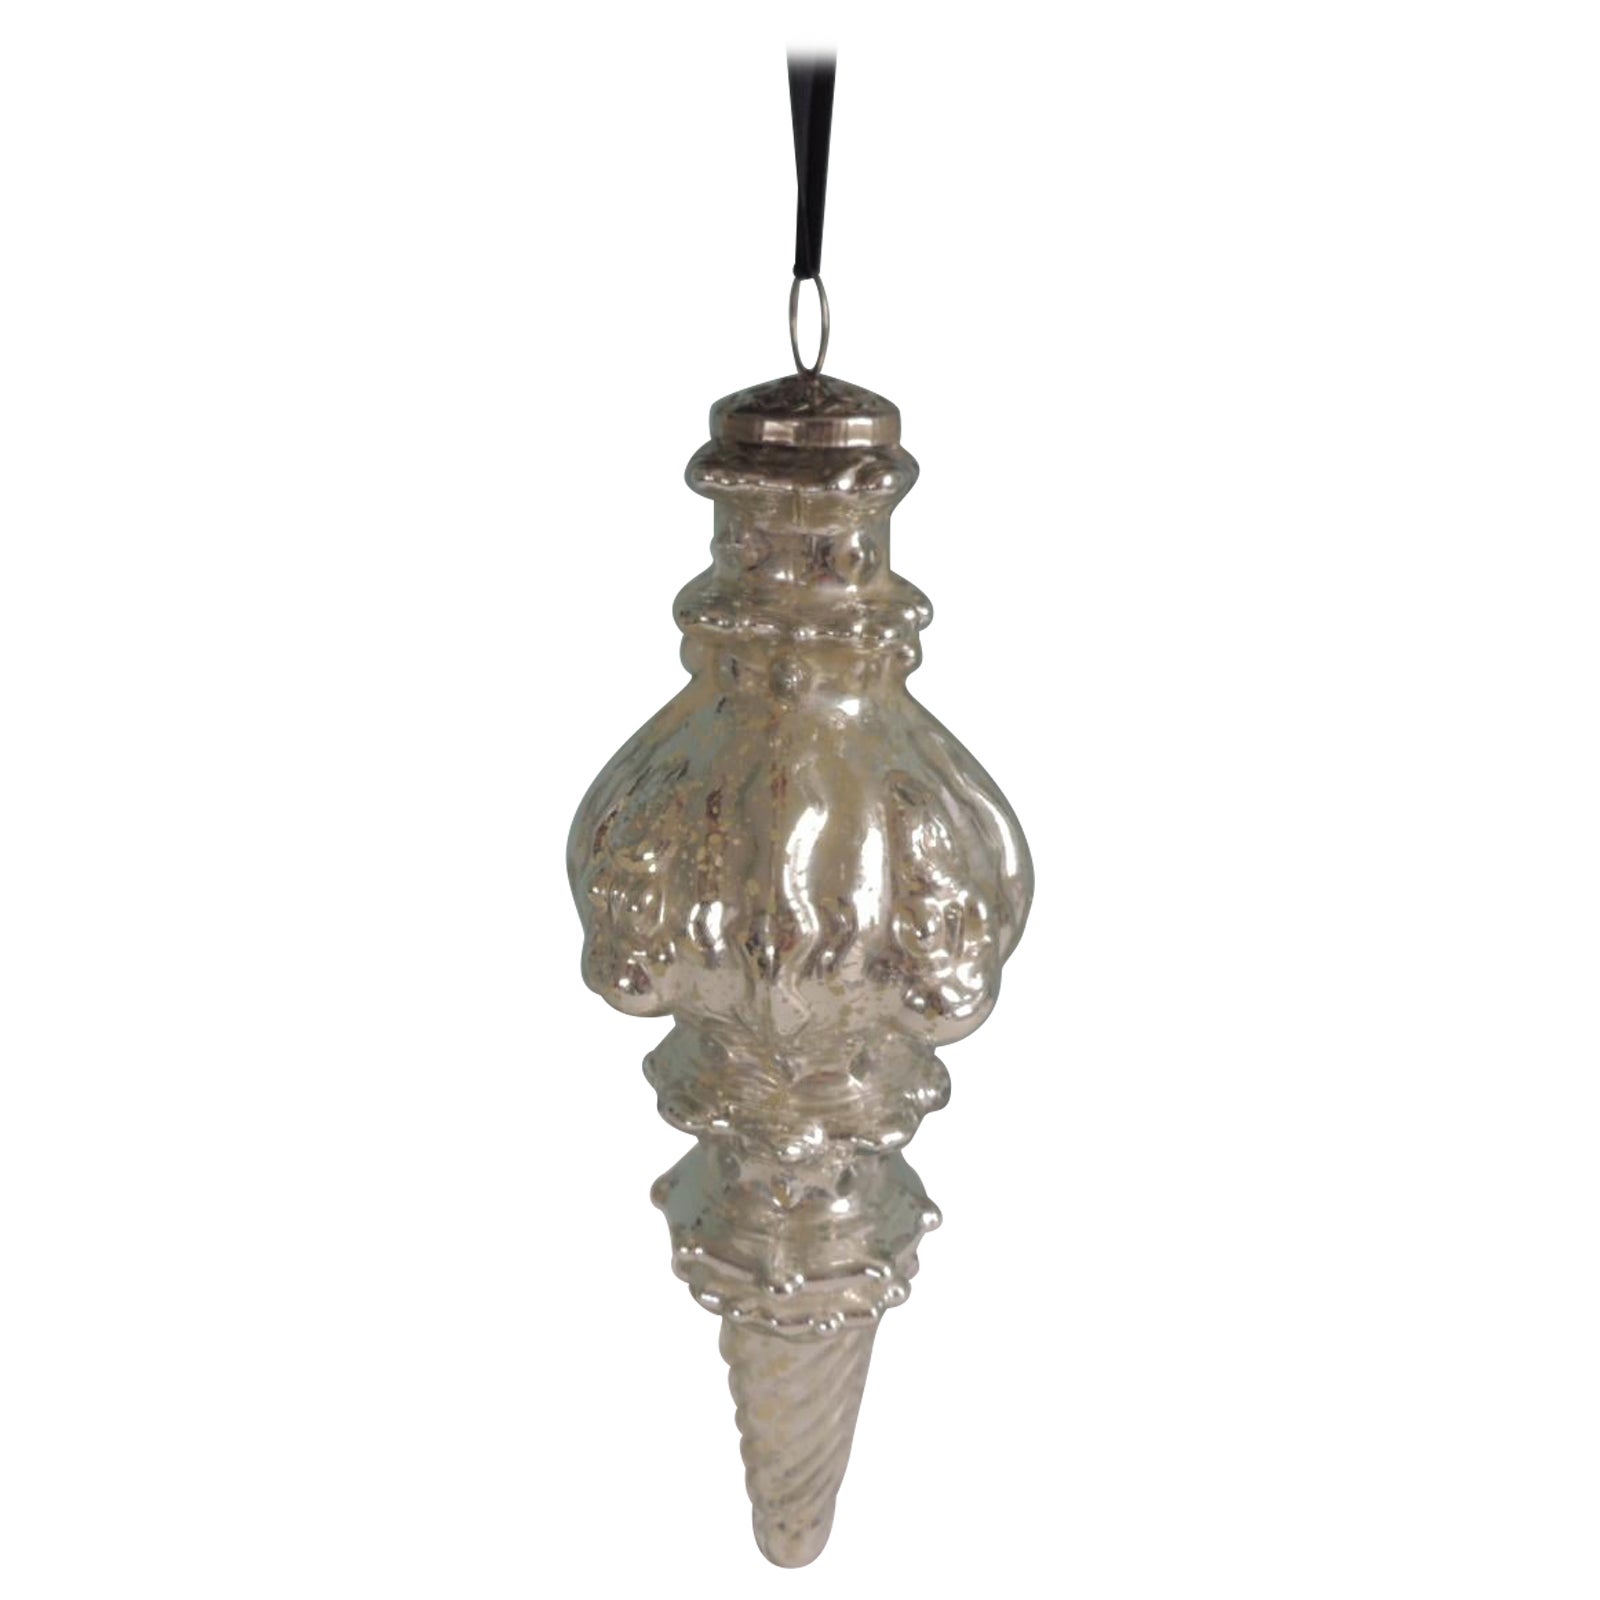 Vintage Style Monumental Holiday Mercury Glass Ornament